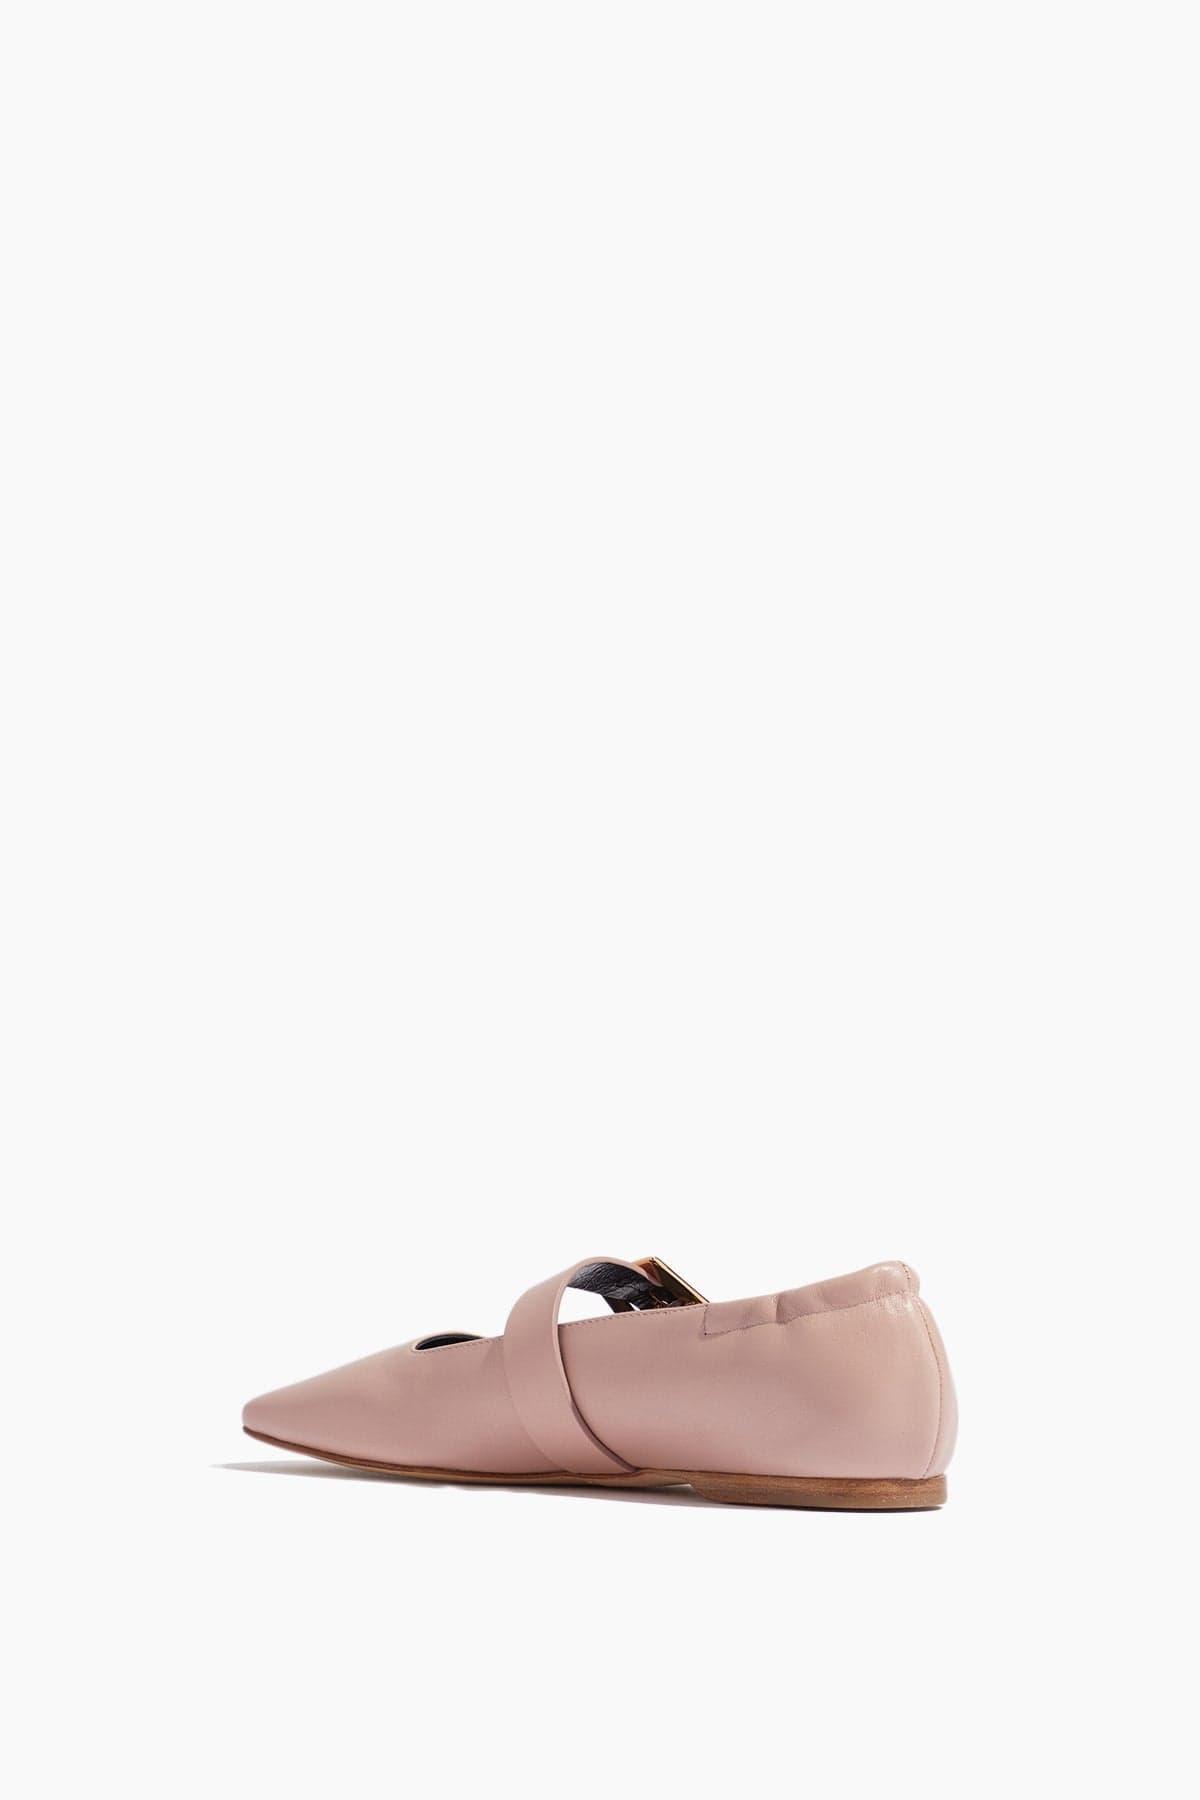 Rupert Sanderson Meledor Flat Shoes in Pink | Lyst